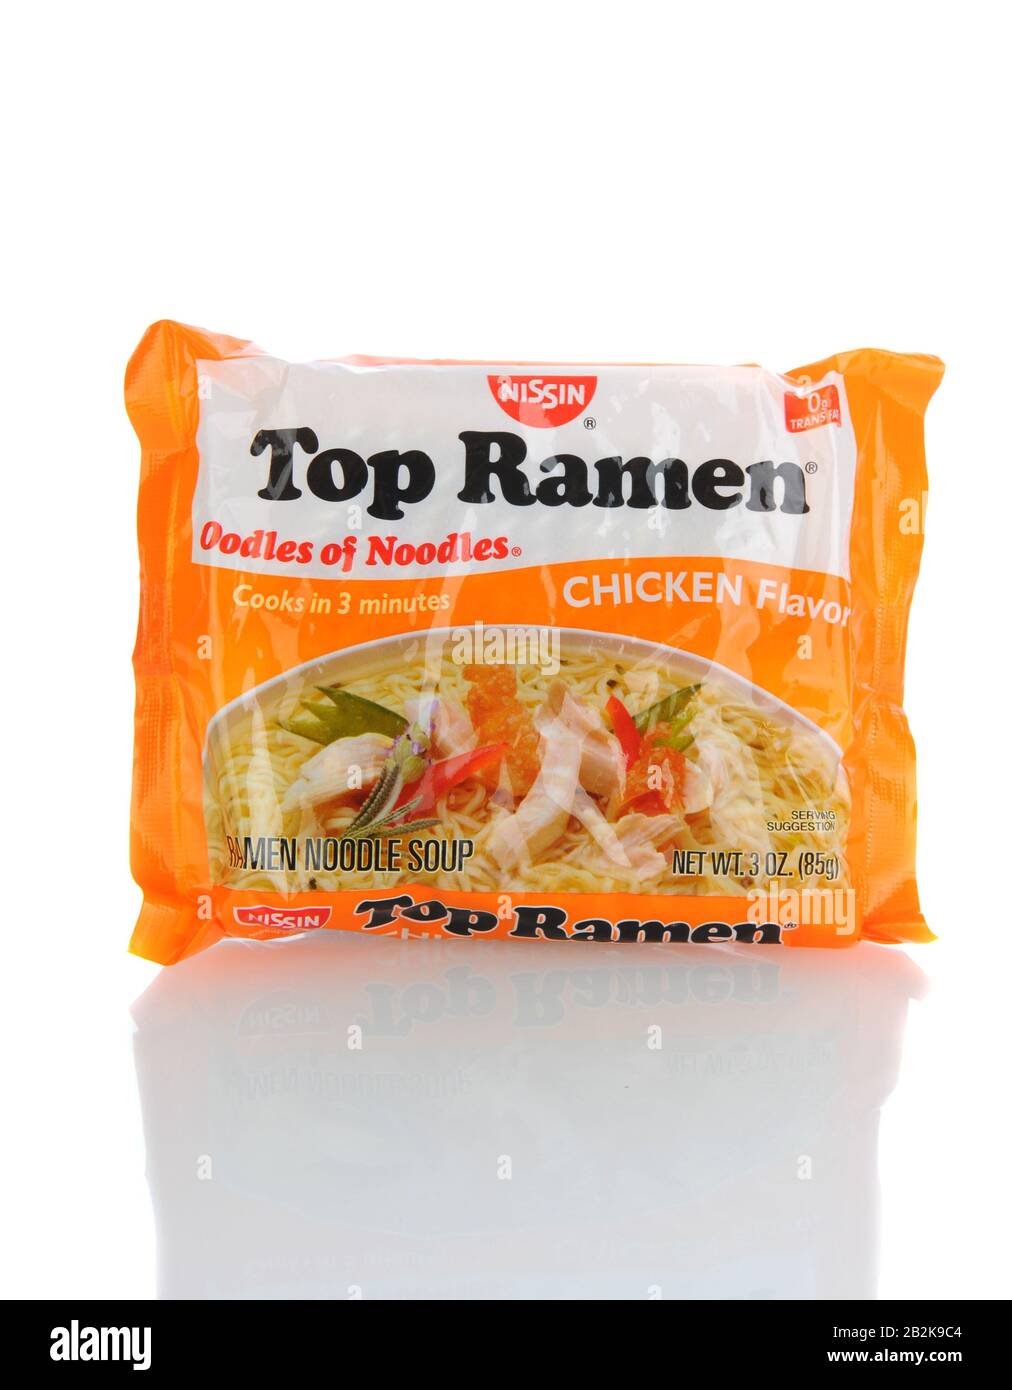 https://c8.alamy.com/comp/2B2K9C4/irvine-ca-january-21-2013-a-3-ounce-package-of-top-ramen-chicken-flavor-manufactured-by-nissin-foods-top-ramen-is-a-favorite-ramen-noodle-since-2B2K9C4.jpg